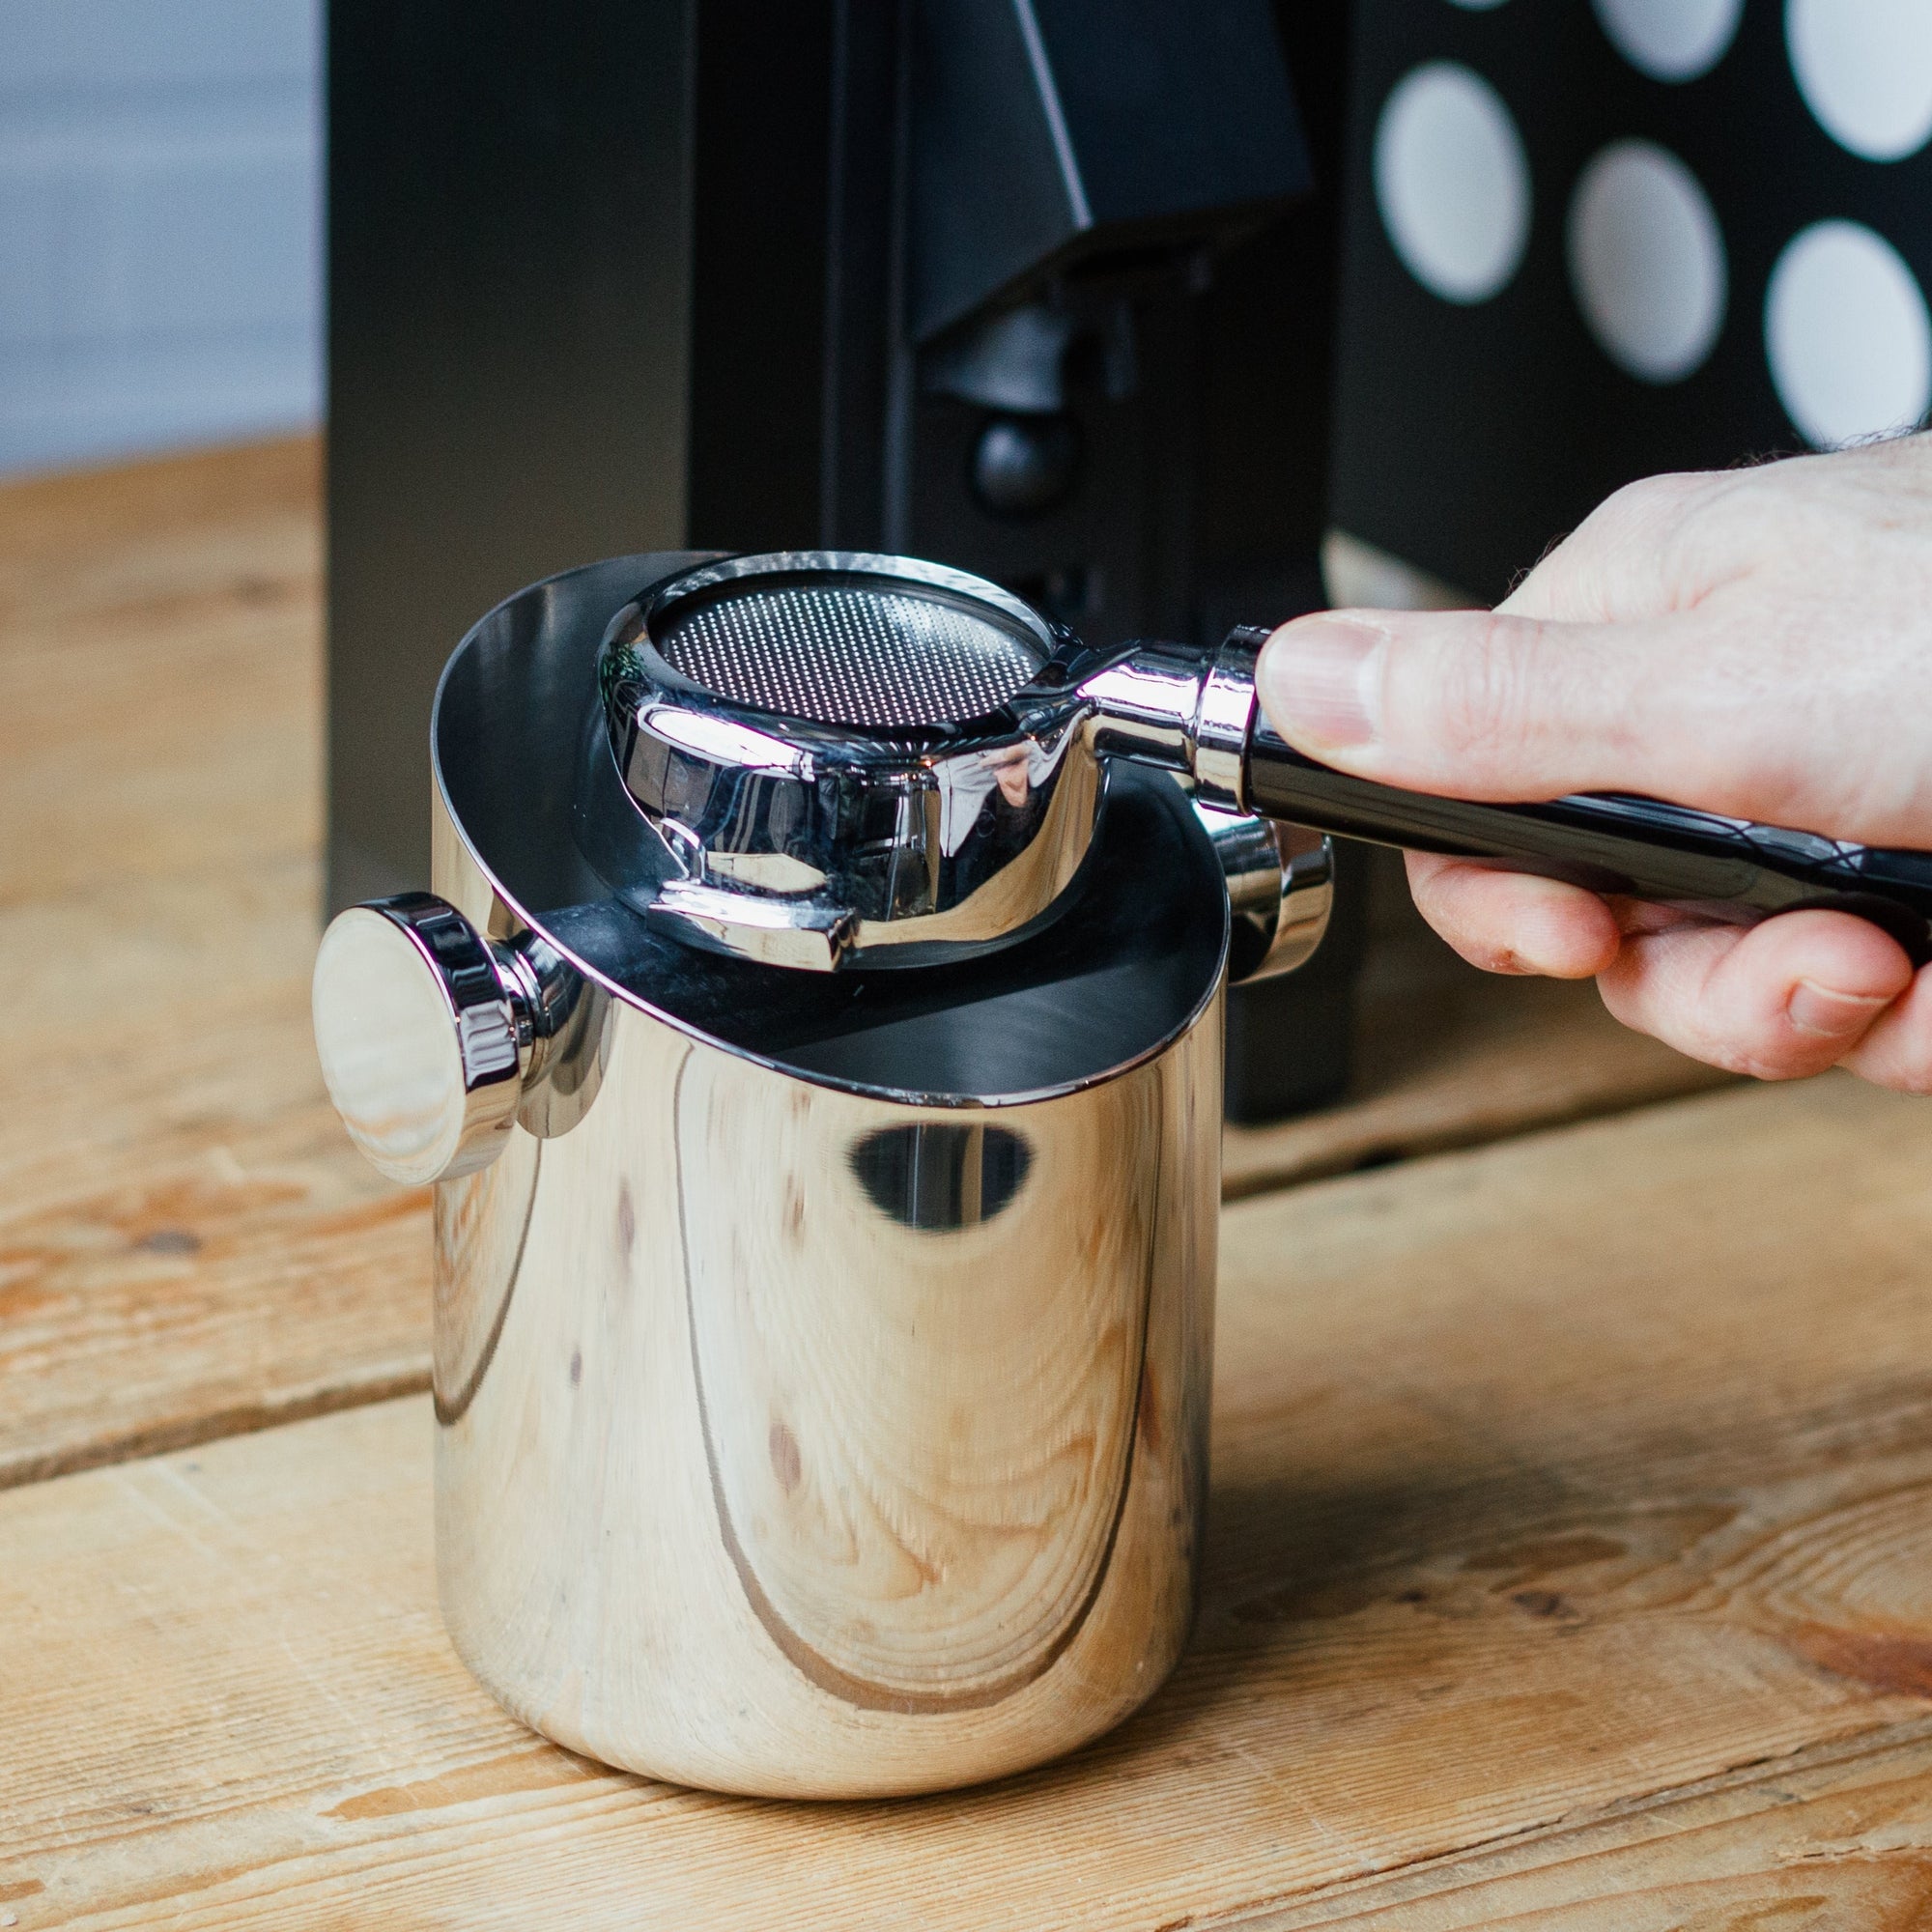 Milk Thermos  Newco Accessory for the Cafe Espresso Machine